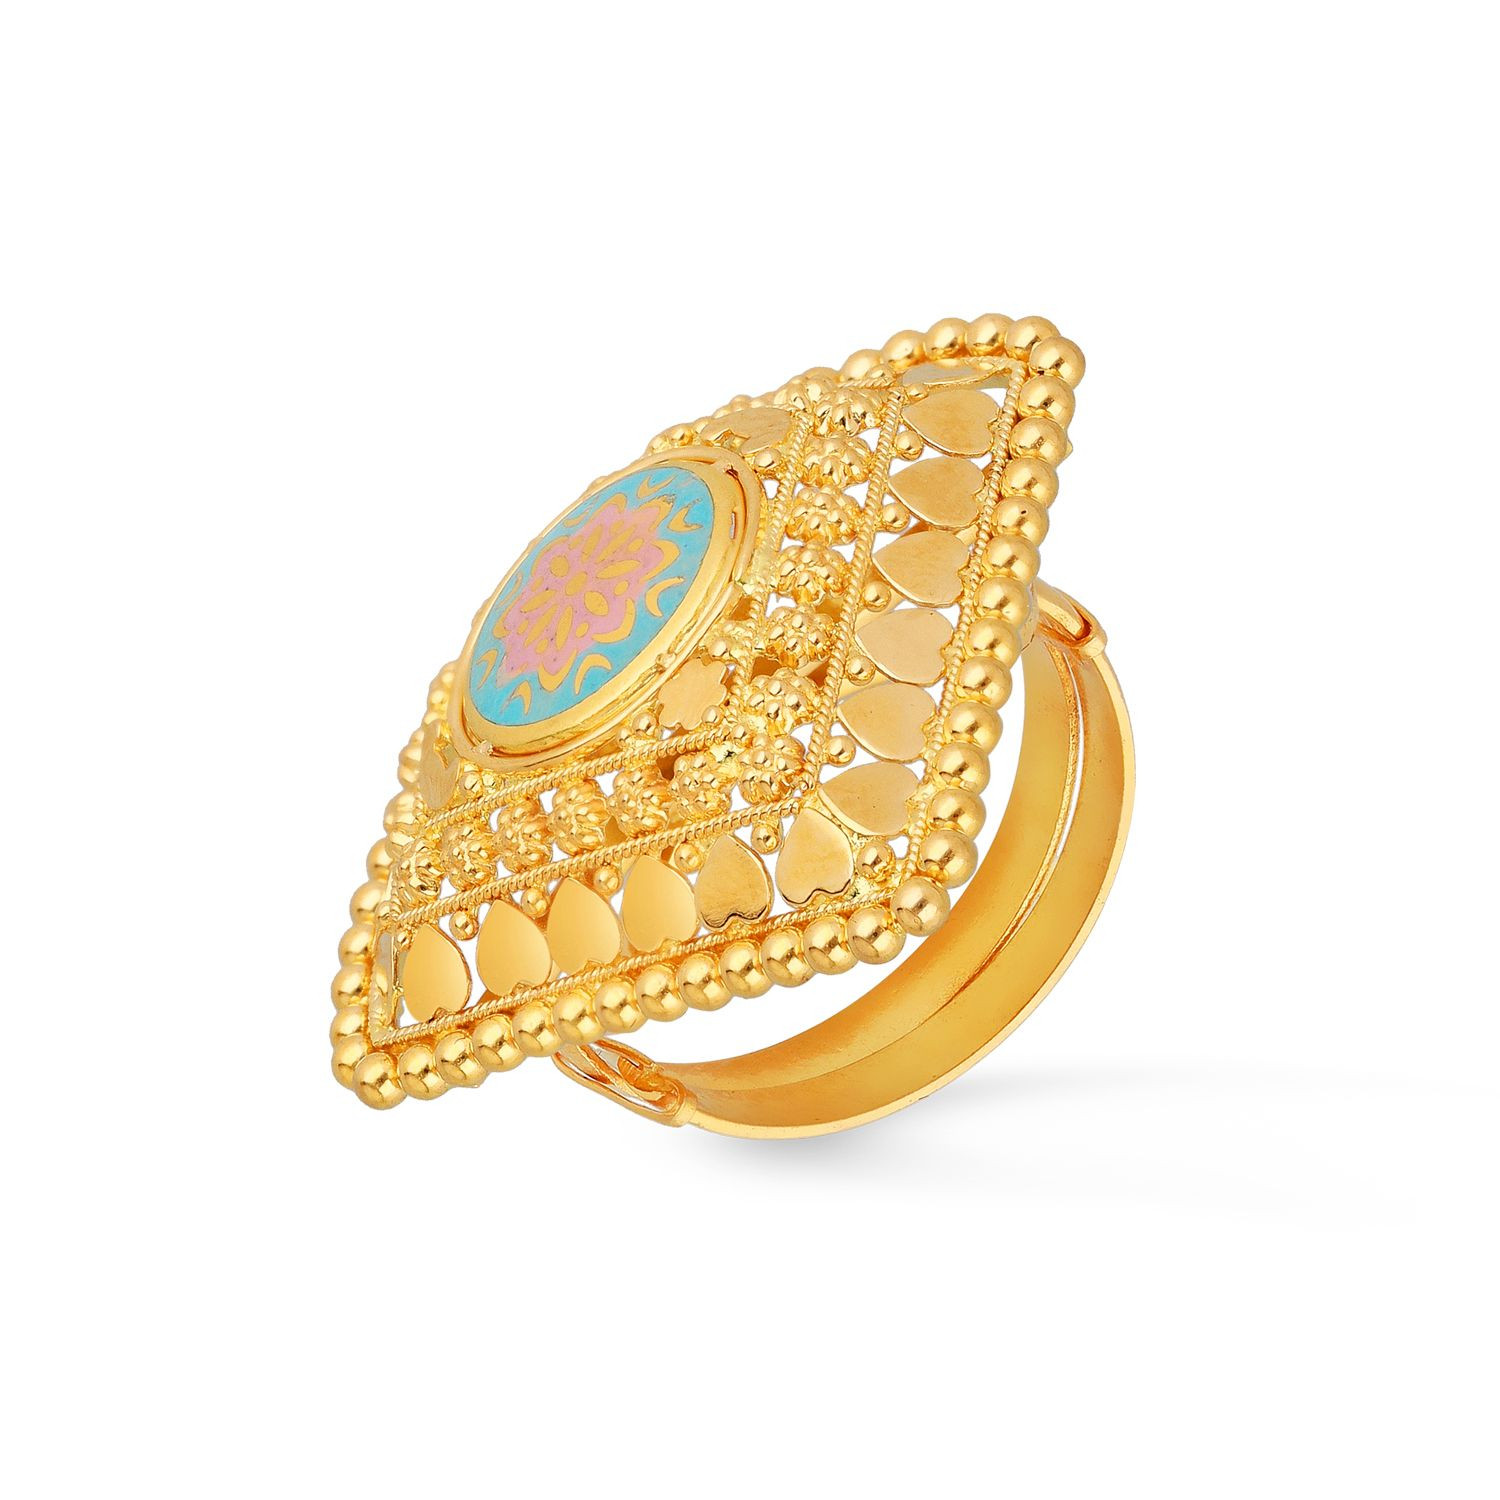 Nawarathna ring designs | Ring designs, Gold rings jewelry, Flower wedding  ring